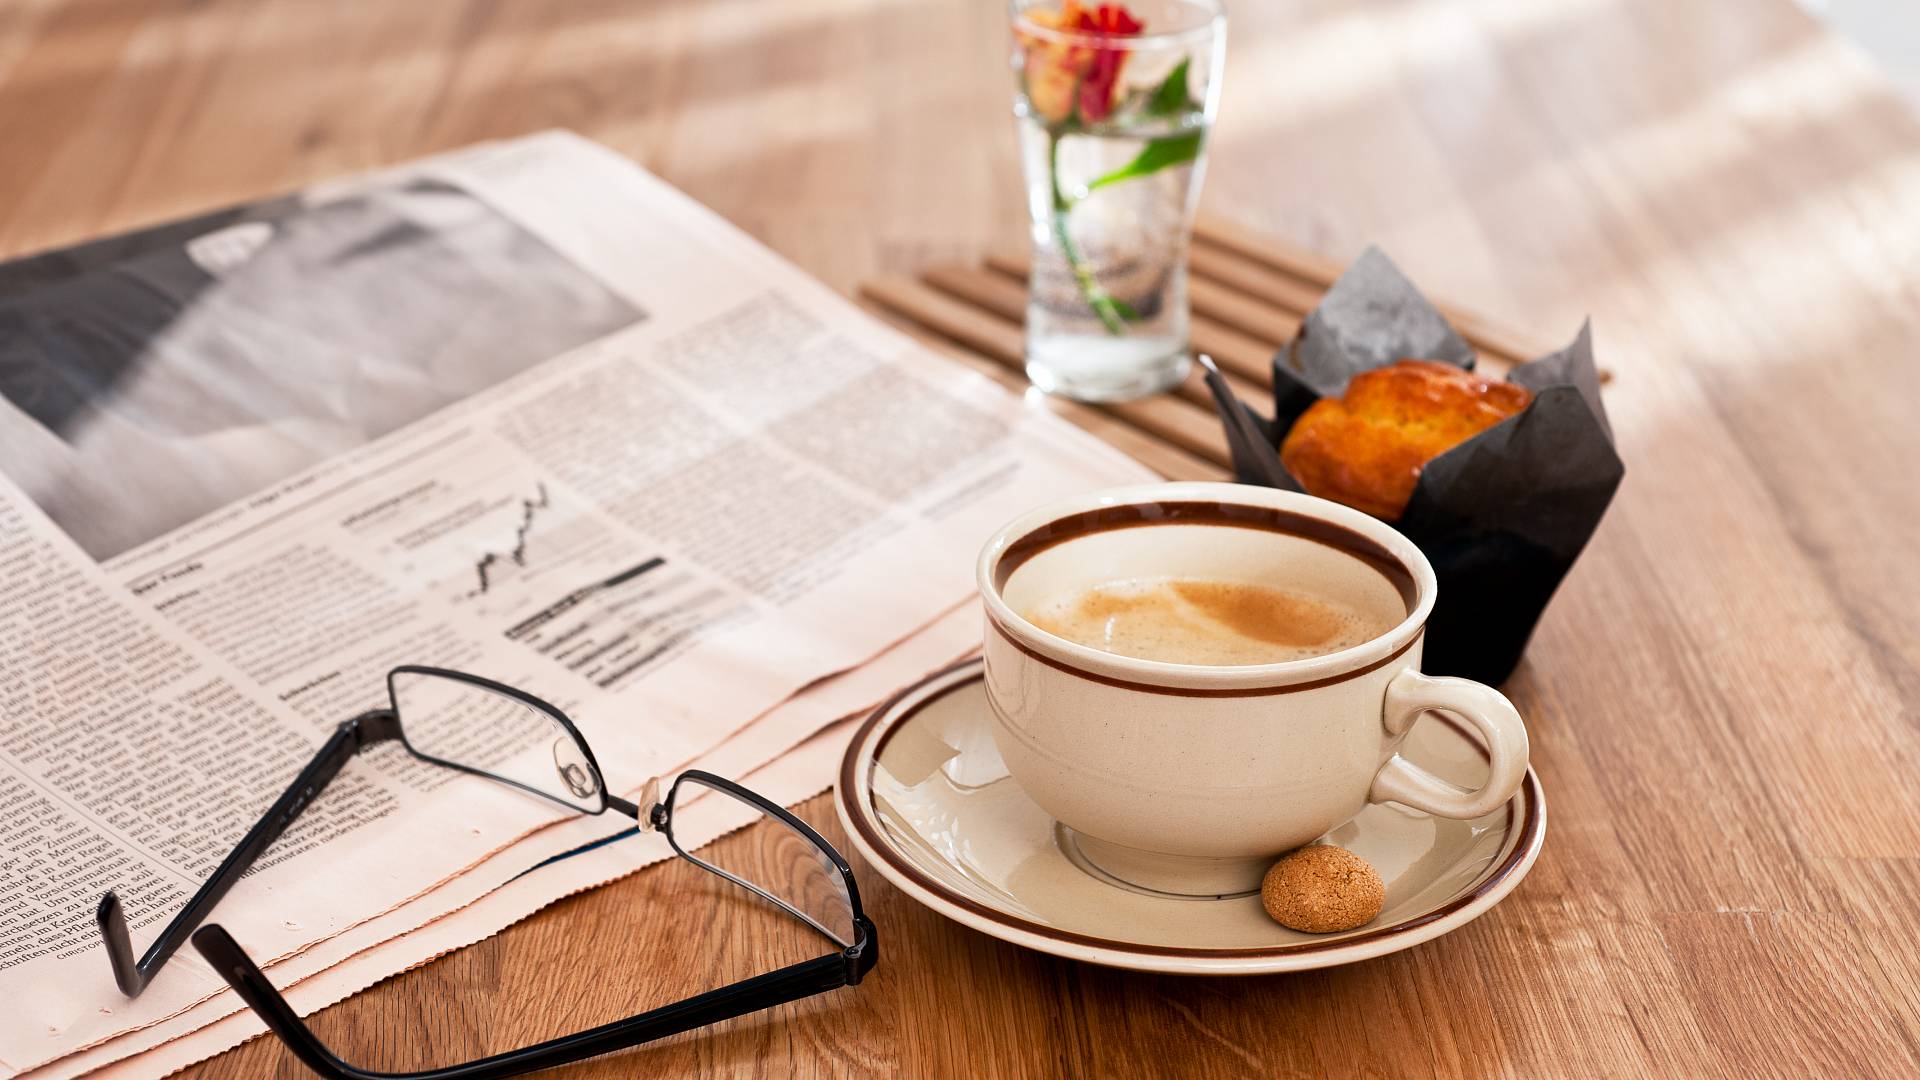 Coffee, breakfast and newspaper